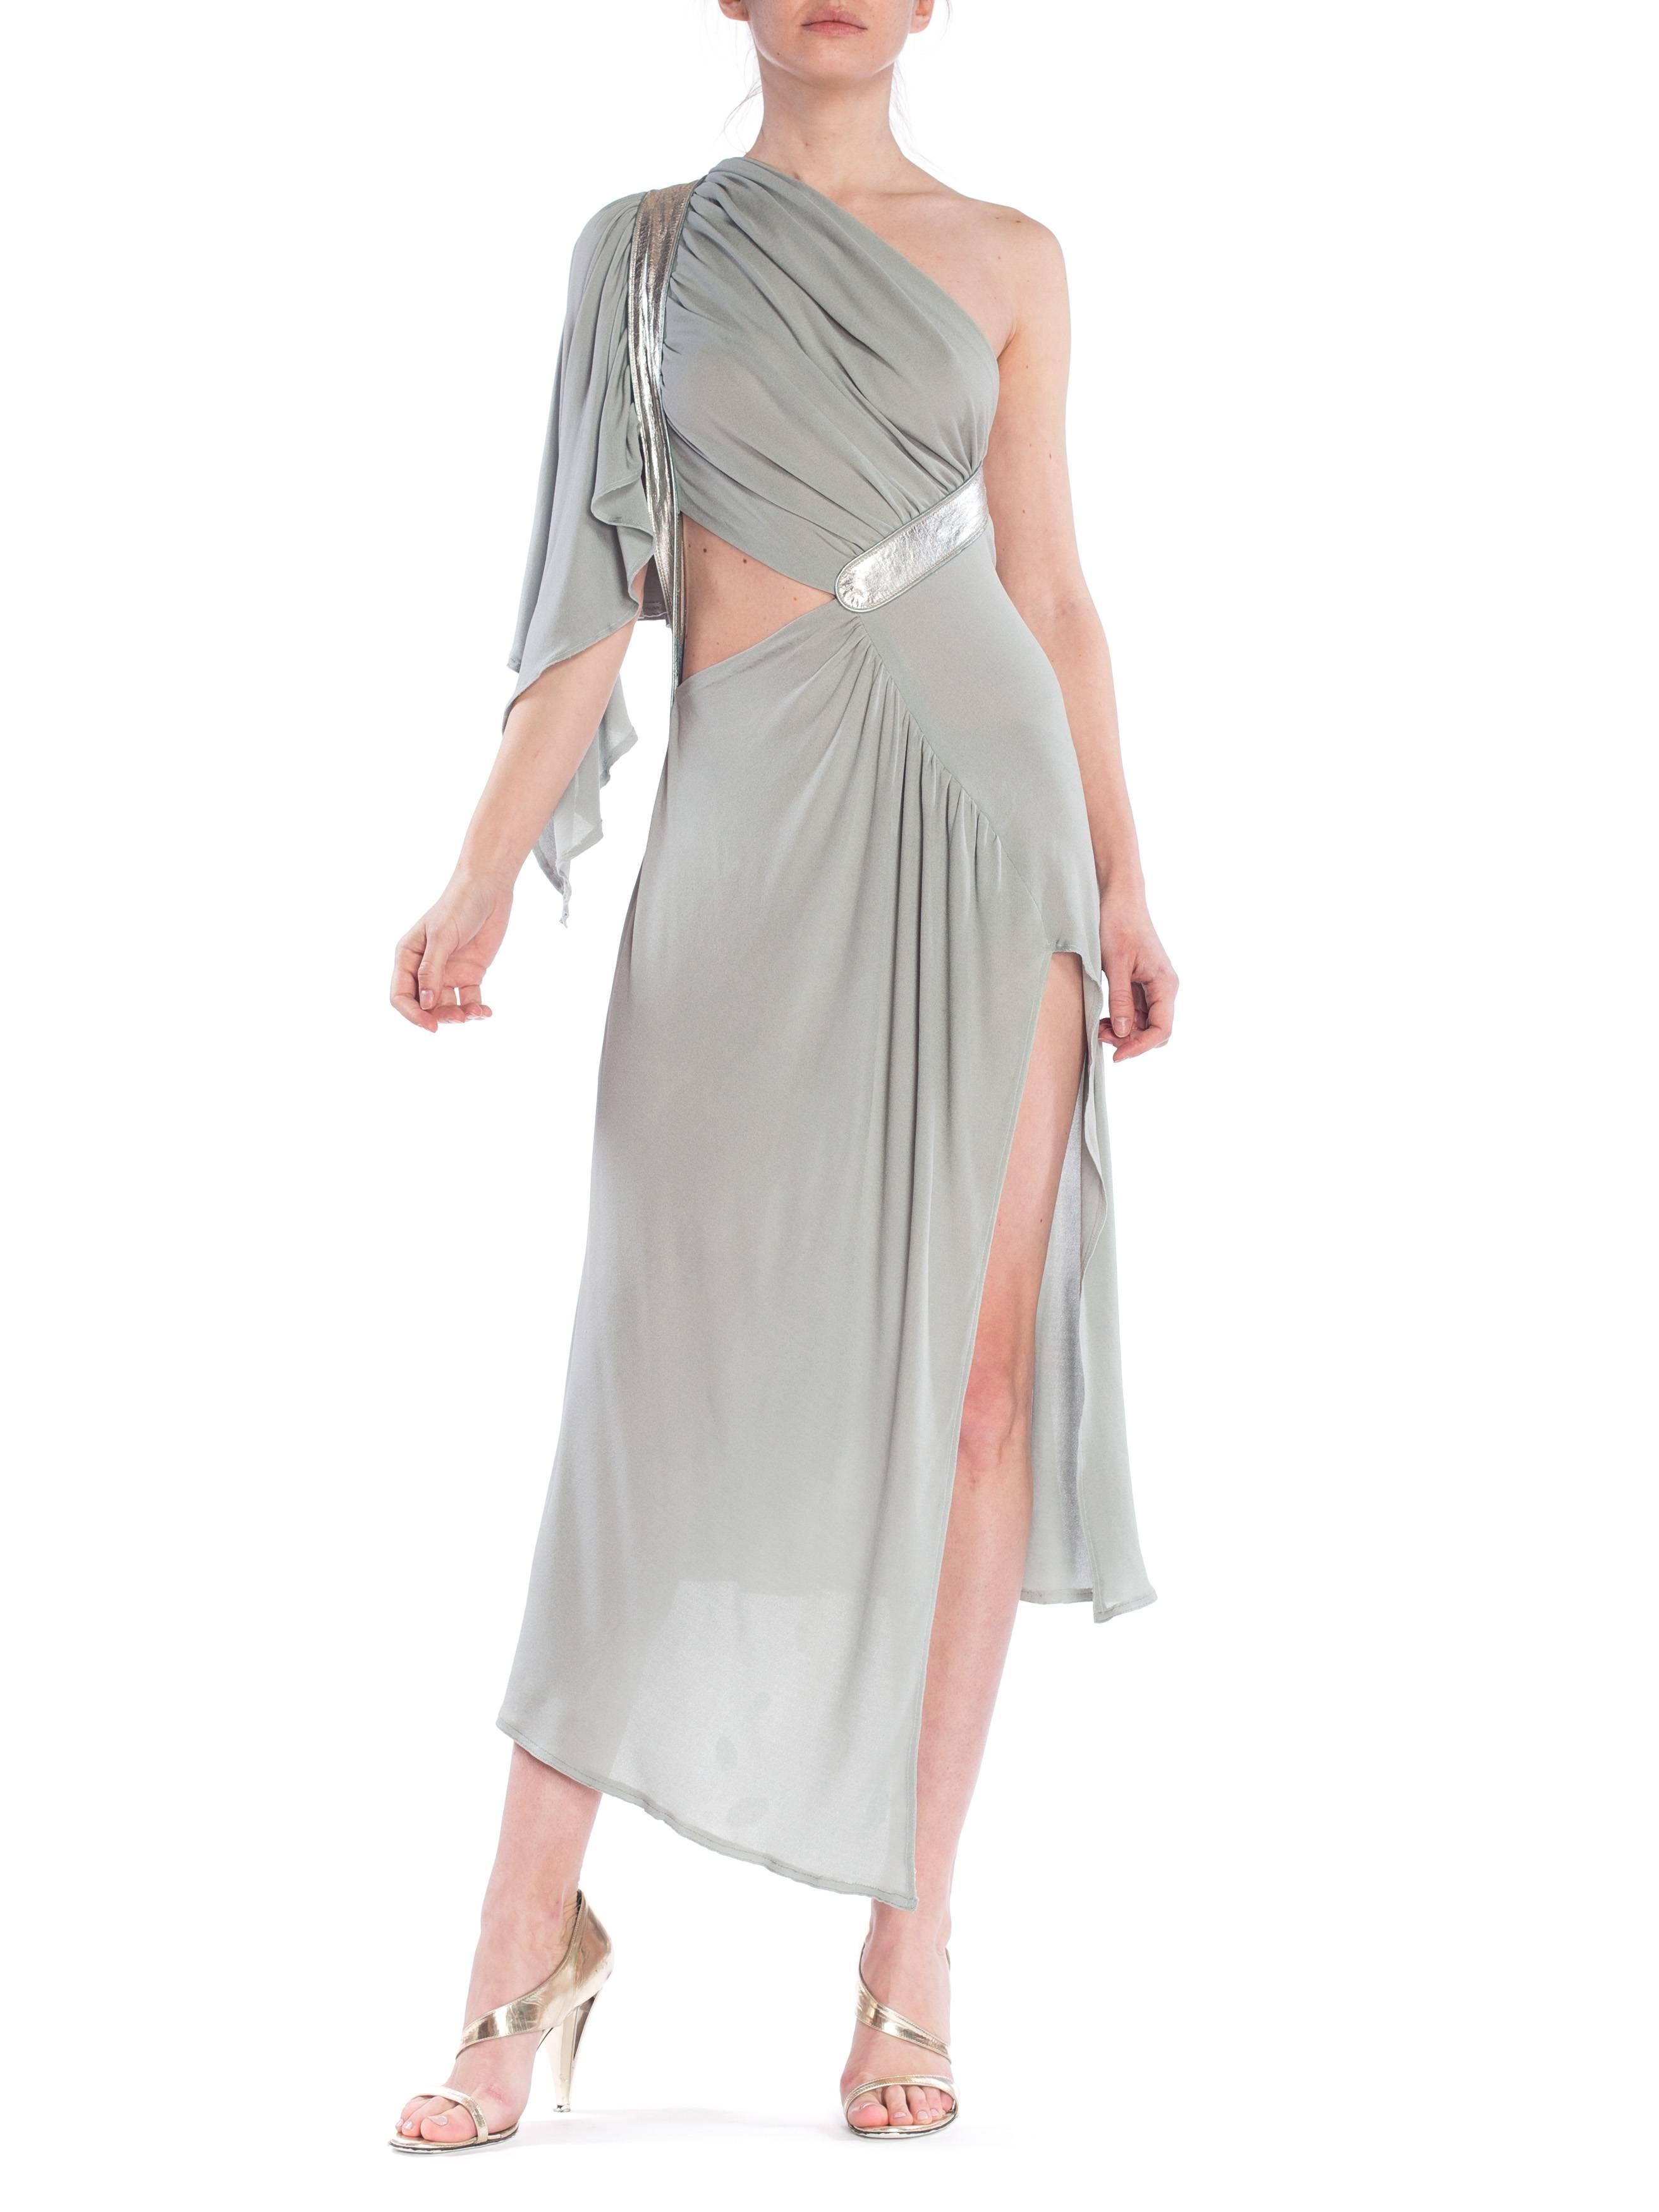 Women's MORPHEW COLLECTION Seafoam Grey Silk Jersey Draped Cut-Out Cocktail Dress